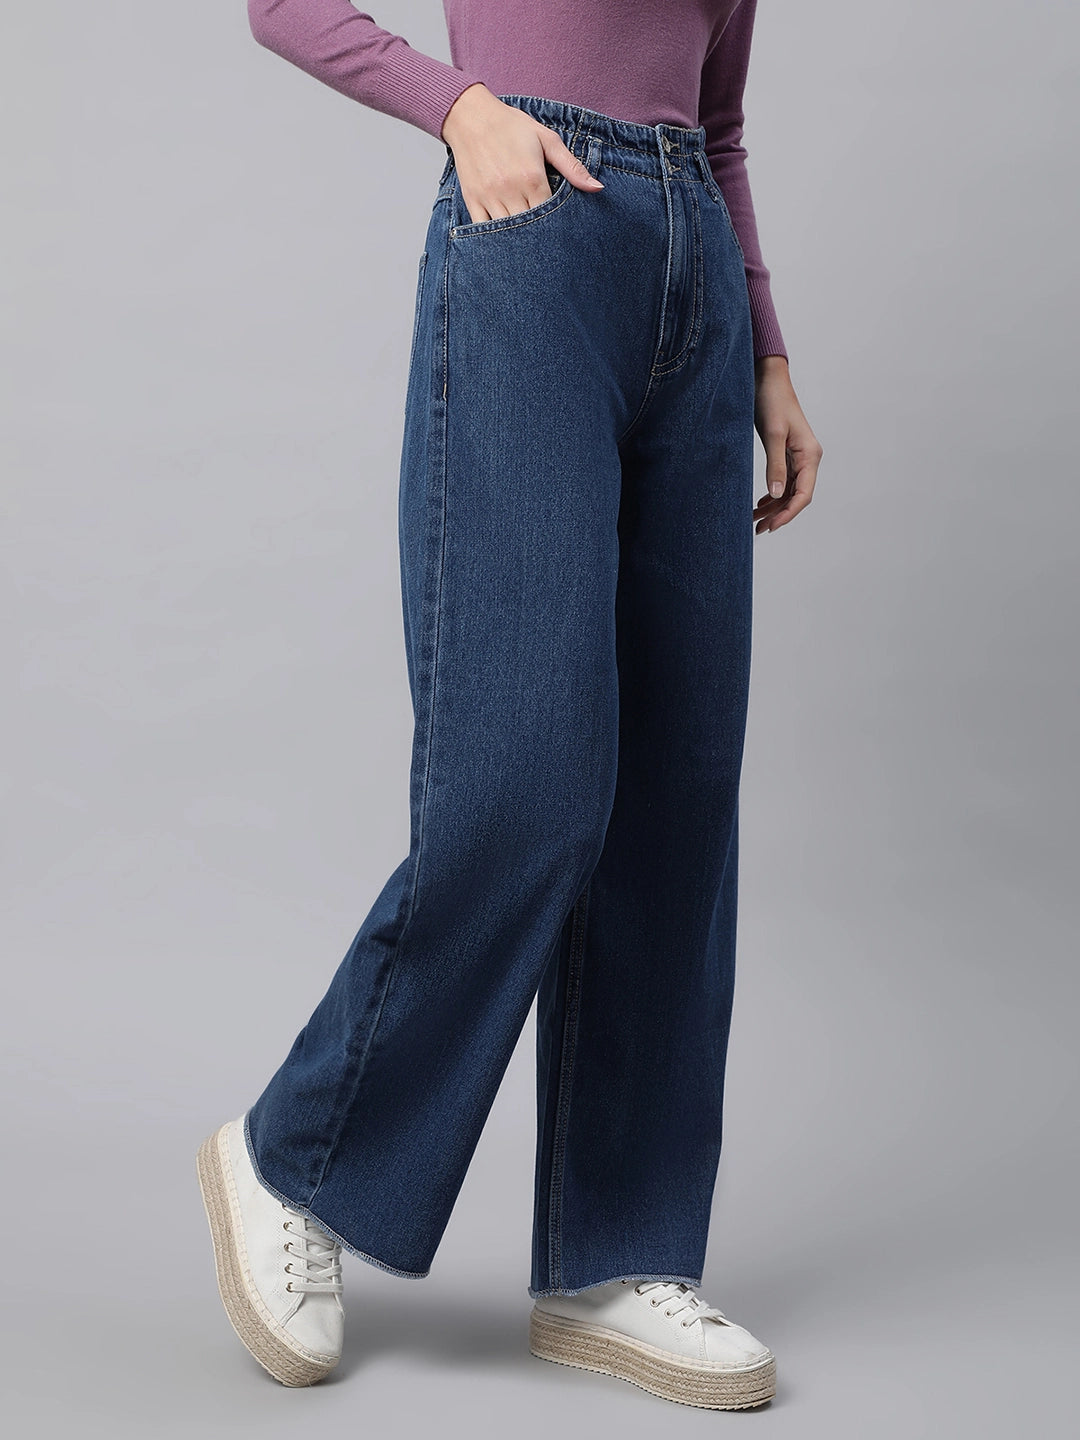 women mid rise jeans